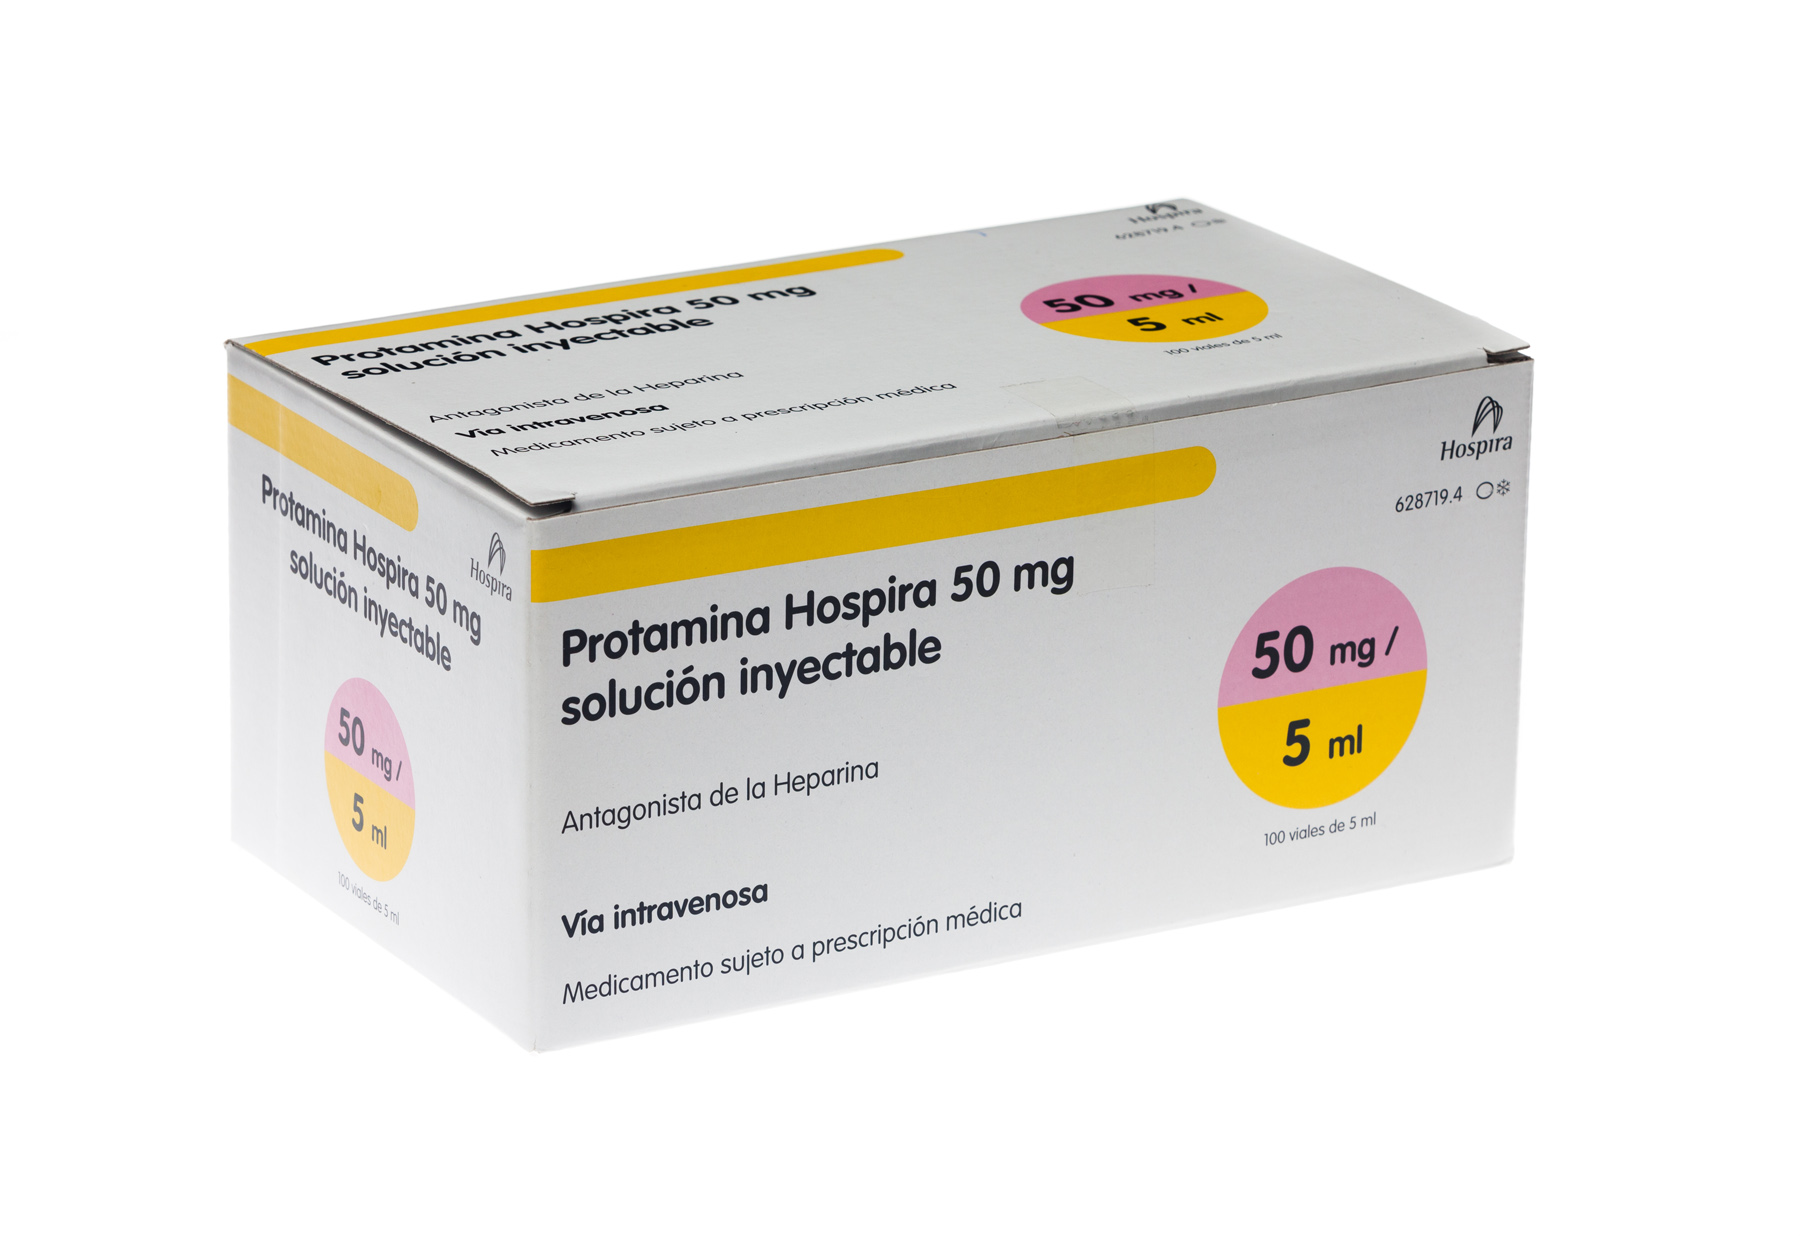 PROTAMINA HOSPIRA 10 mg/ml 1 VIAL SOLUCION INYECTABLE 5 ml